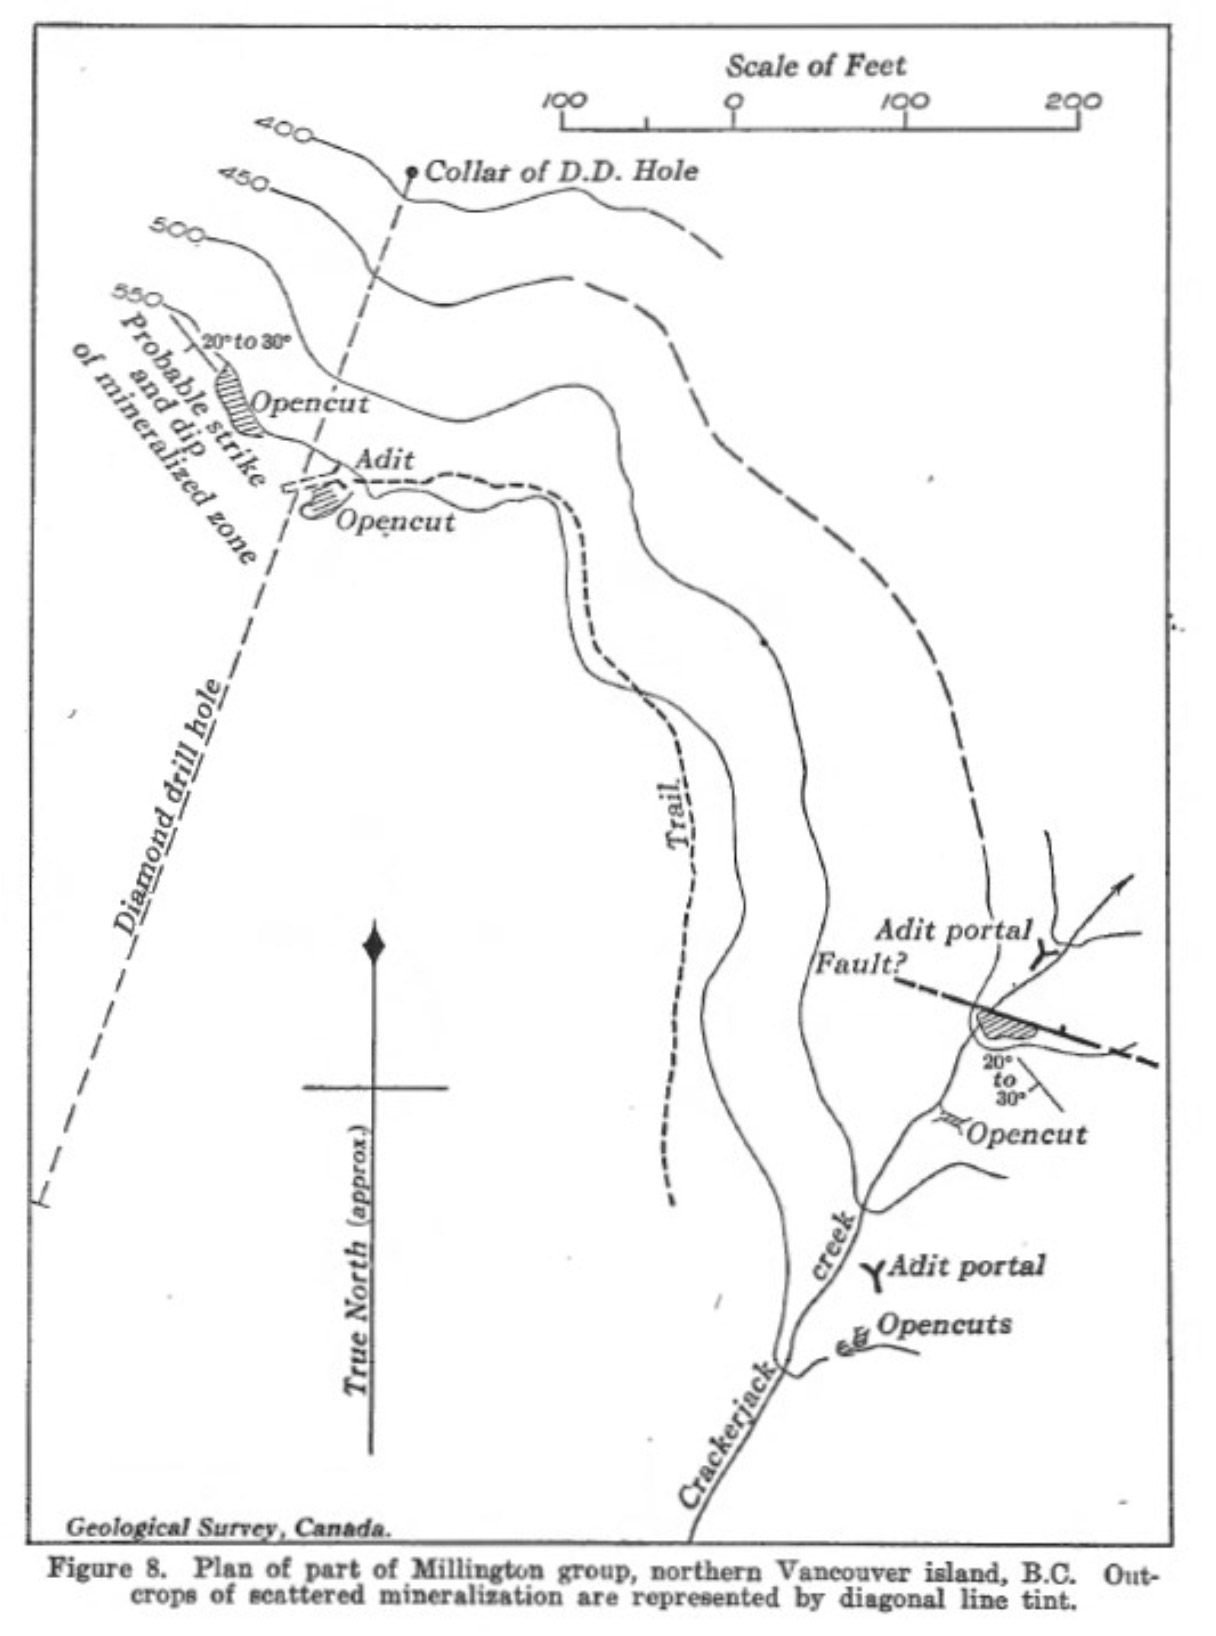 Figure 4: Crackjack Creek Area (Millington Showing) in 1929